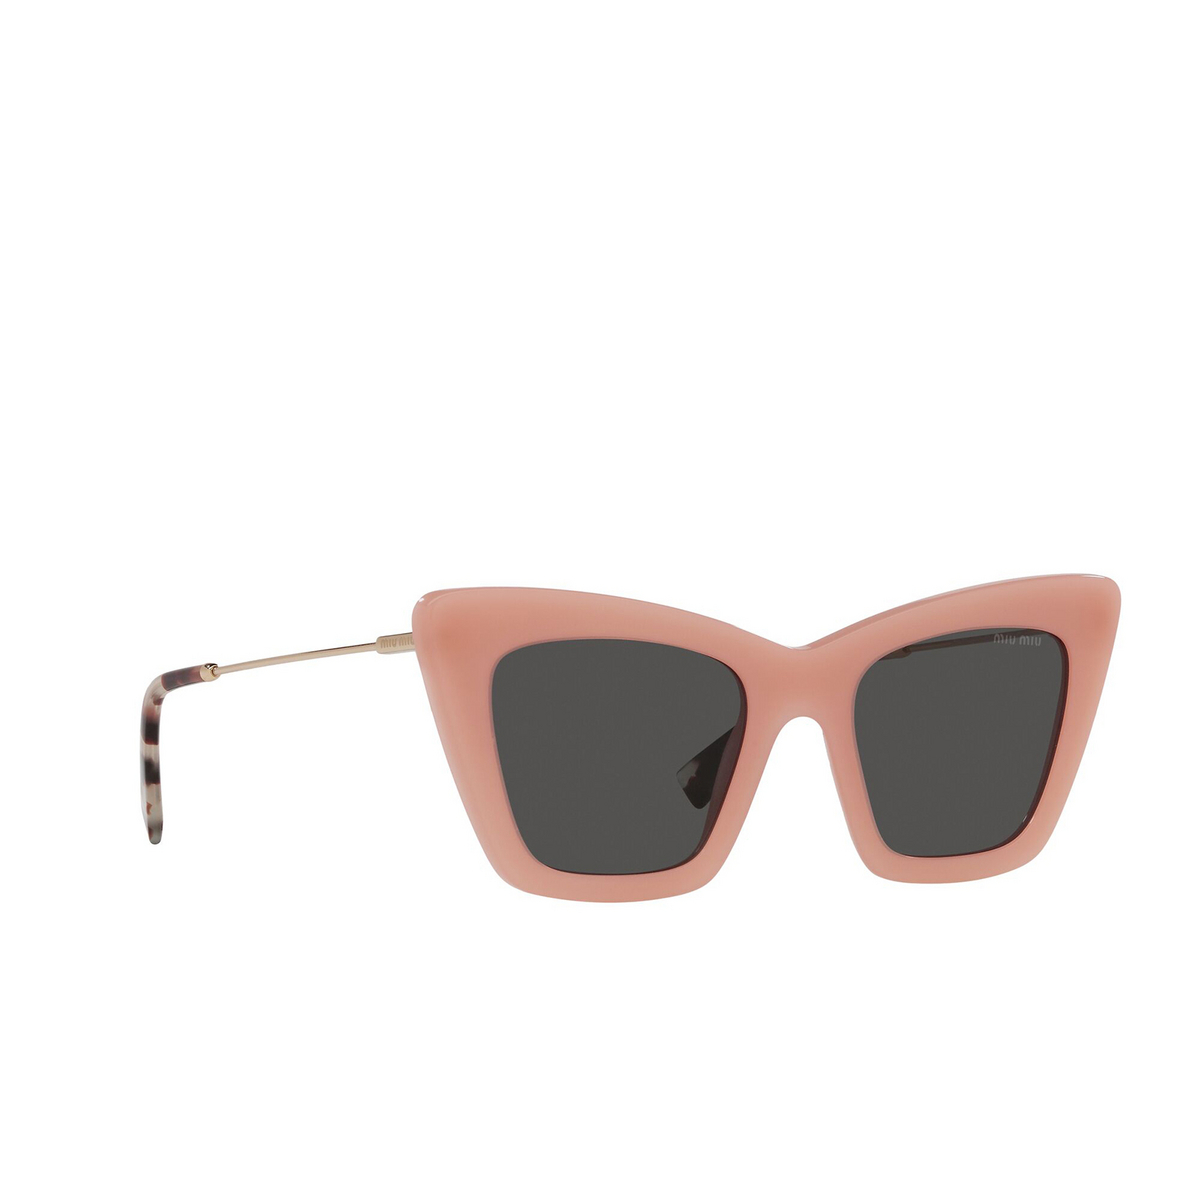 Miu Miu® Cat-eye Sunglasses: MU 01WS color Opal Pink 06X5S0 - three-quarters view.